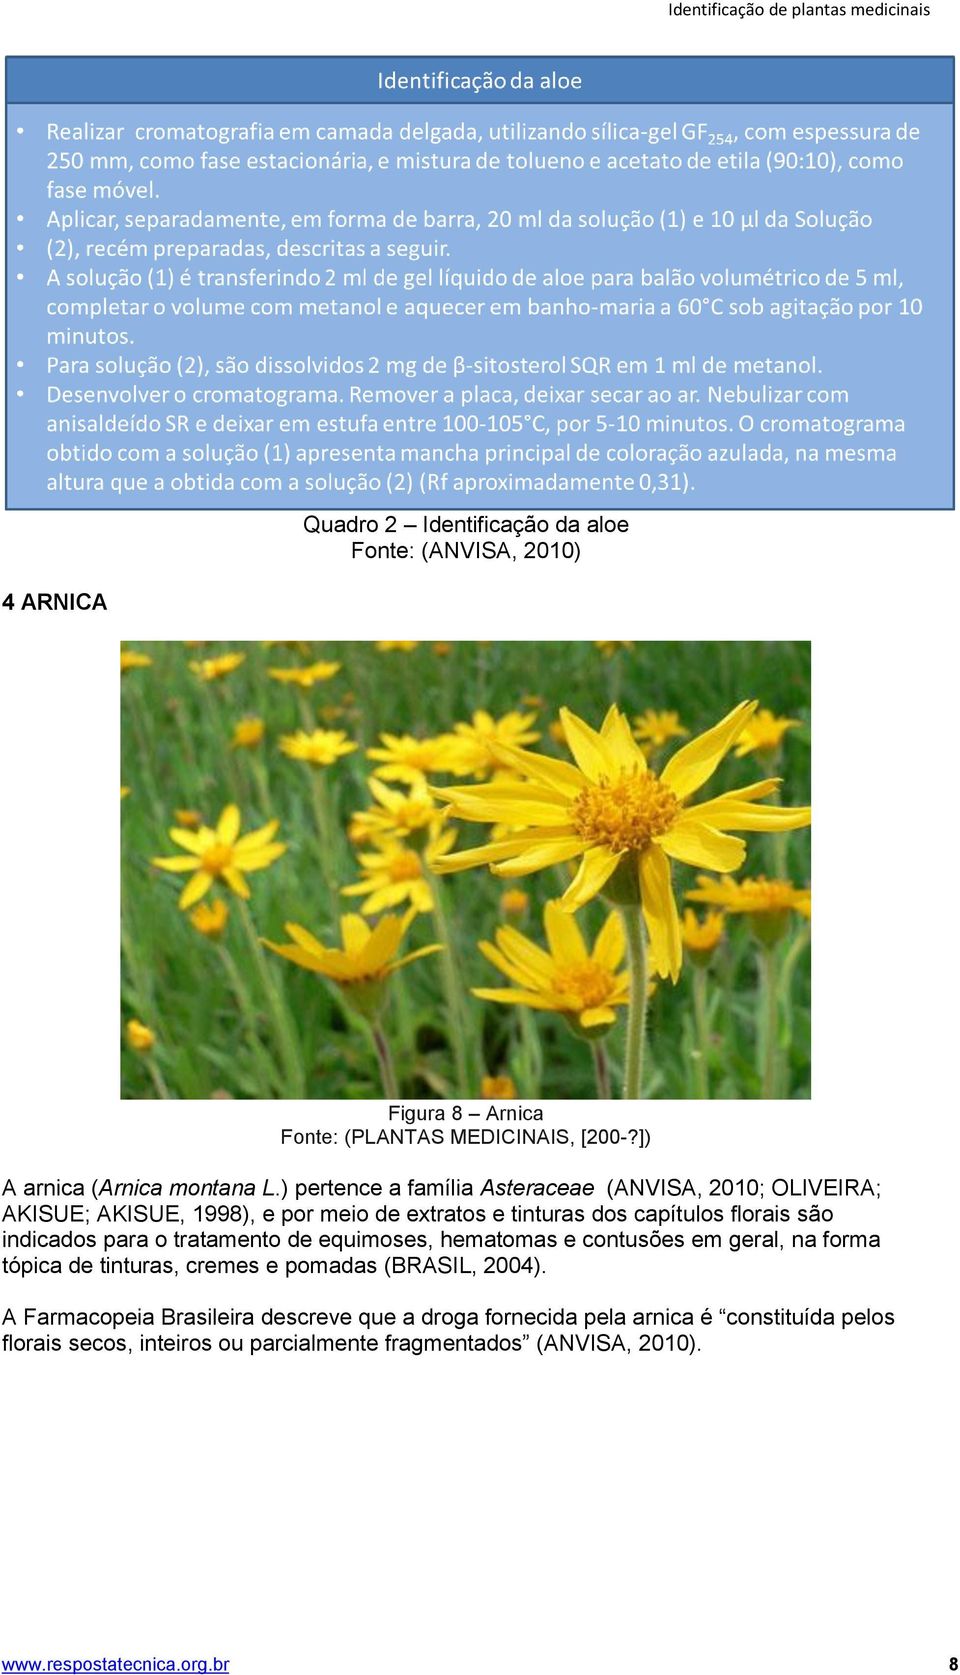 ) pertence a família Asteraceae (ANVISA, 2010; OLIVEIRA; AKISUE; AKISUE, 1998), e por meio de extratos e tinturas dos capítulos florais são indicados para o